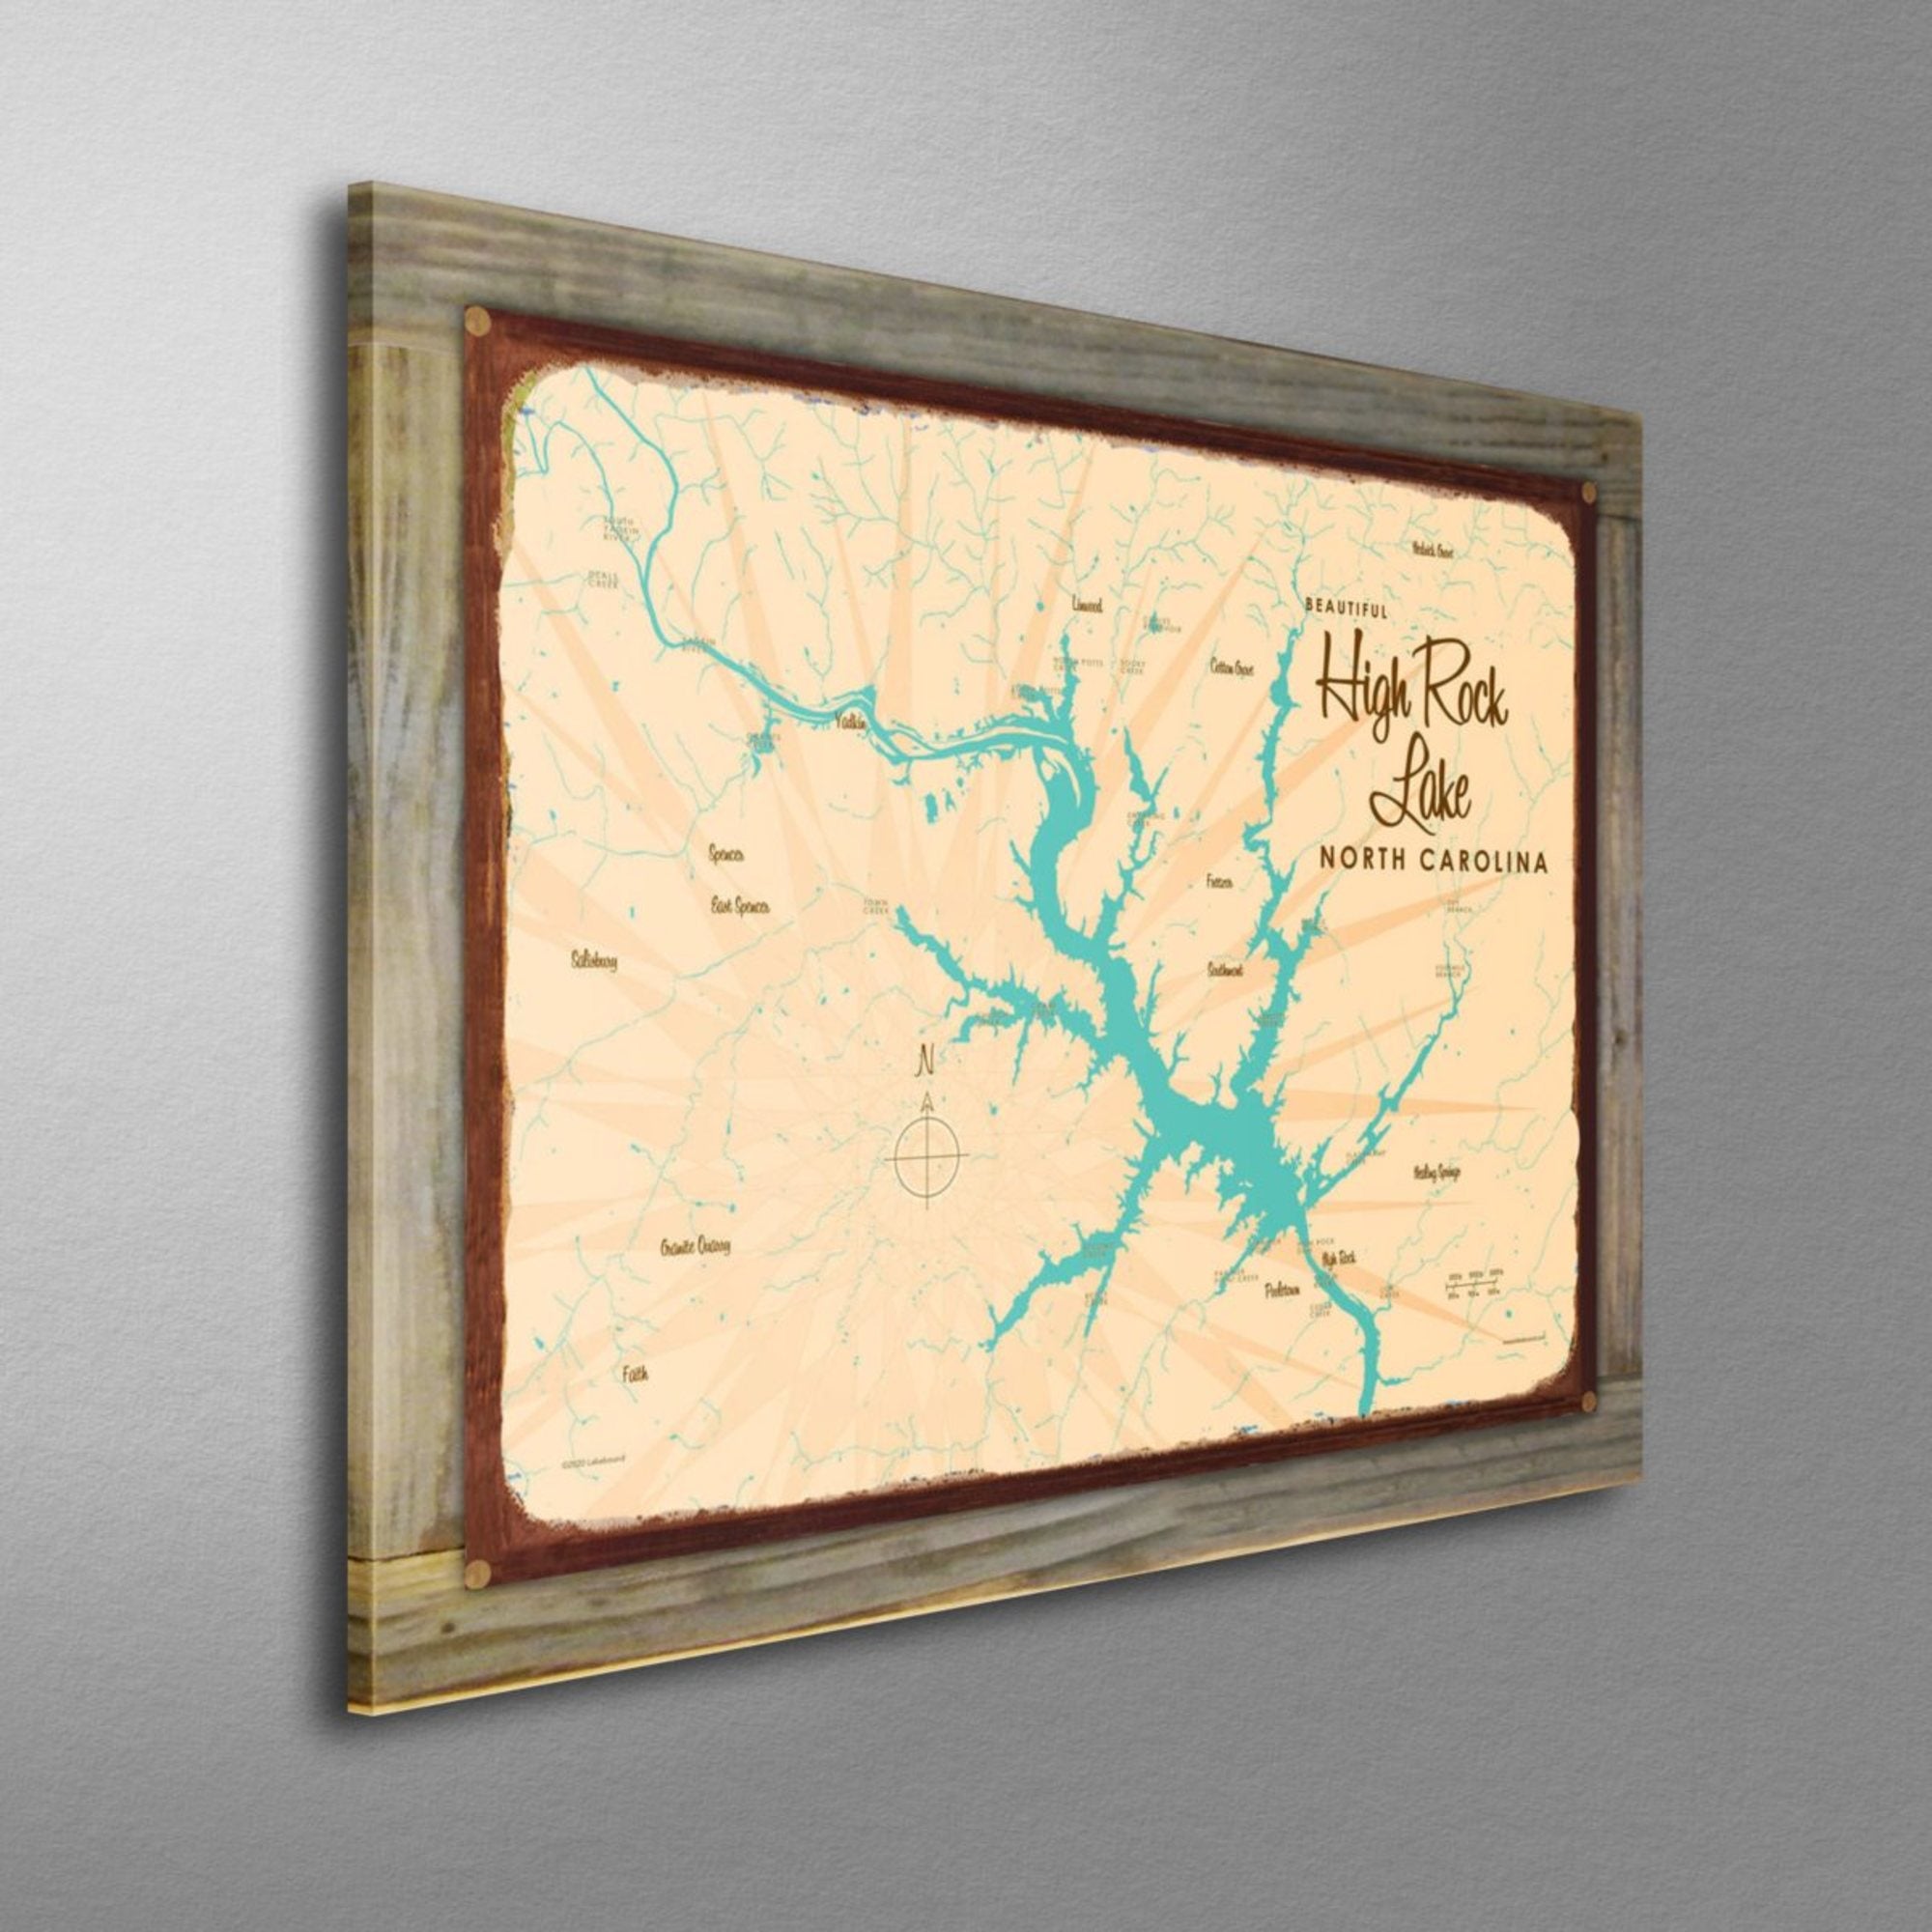 High Rock Lake North Carolina, Wood-Mounted Rustic Metal Sign Map Art